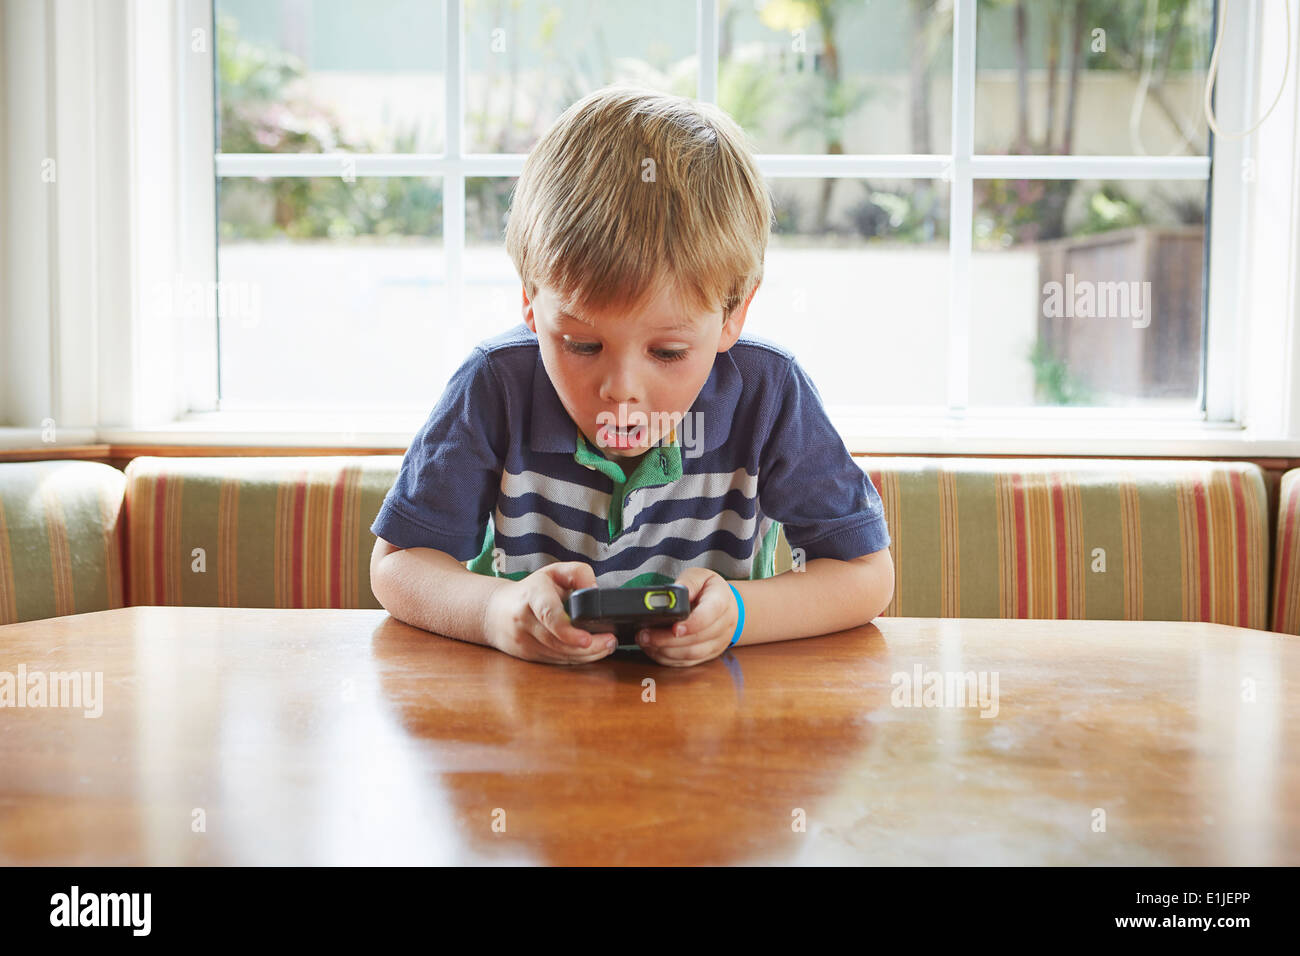 Boy playing handheld video game Stock Photo